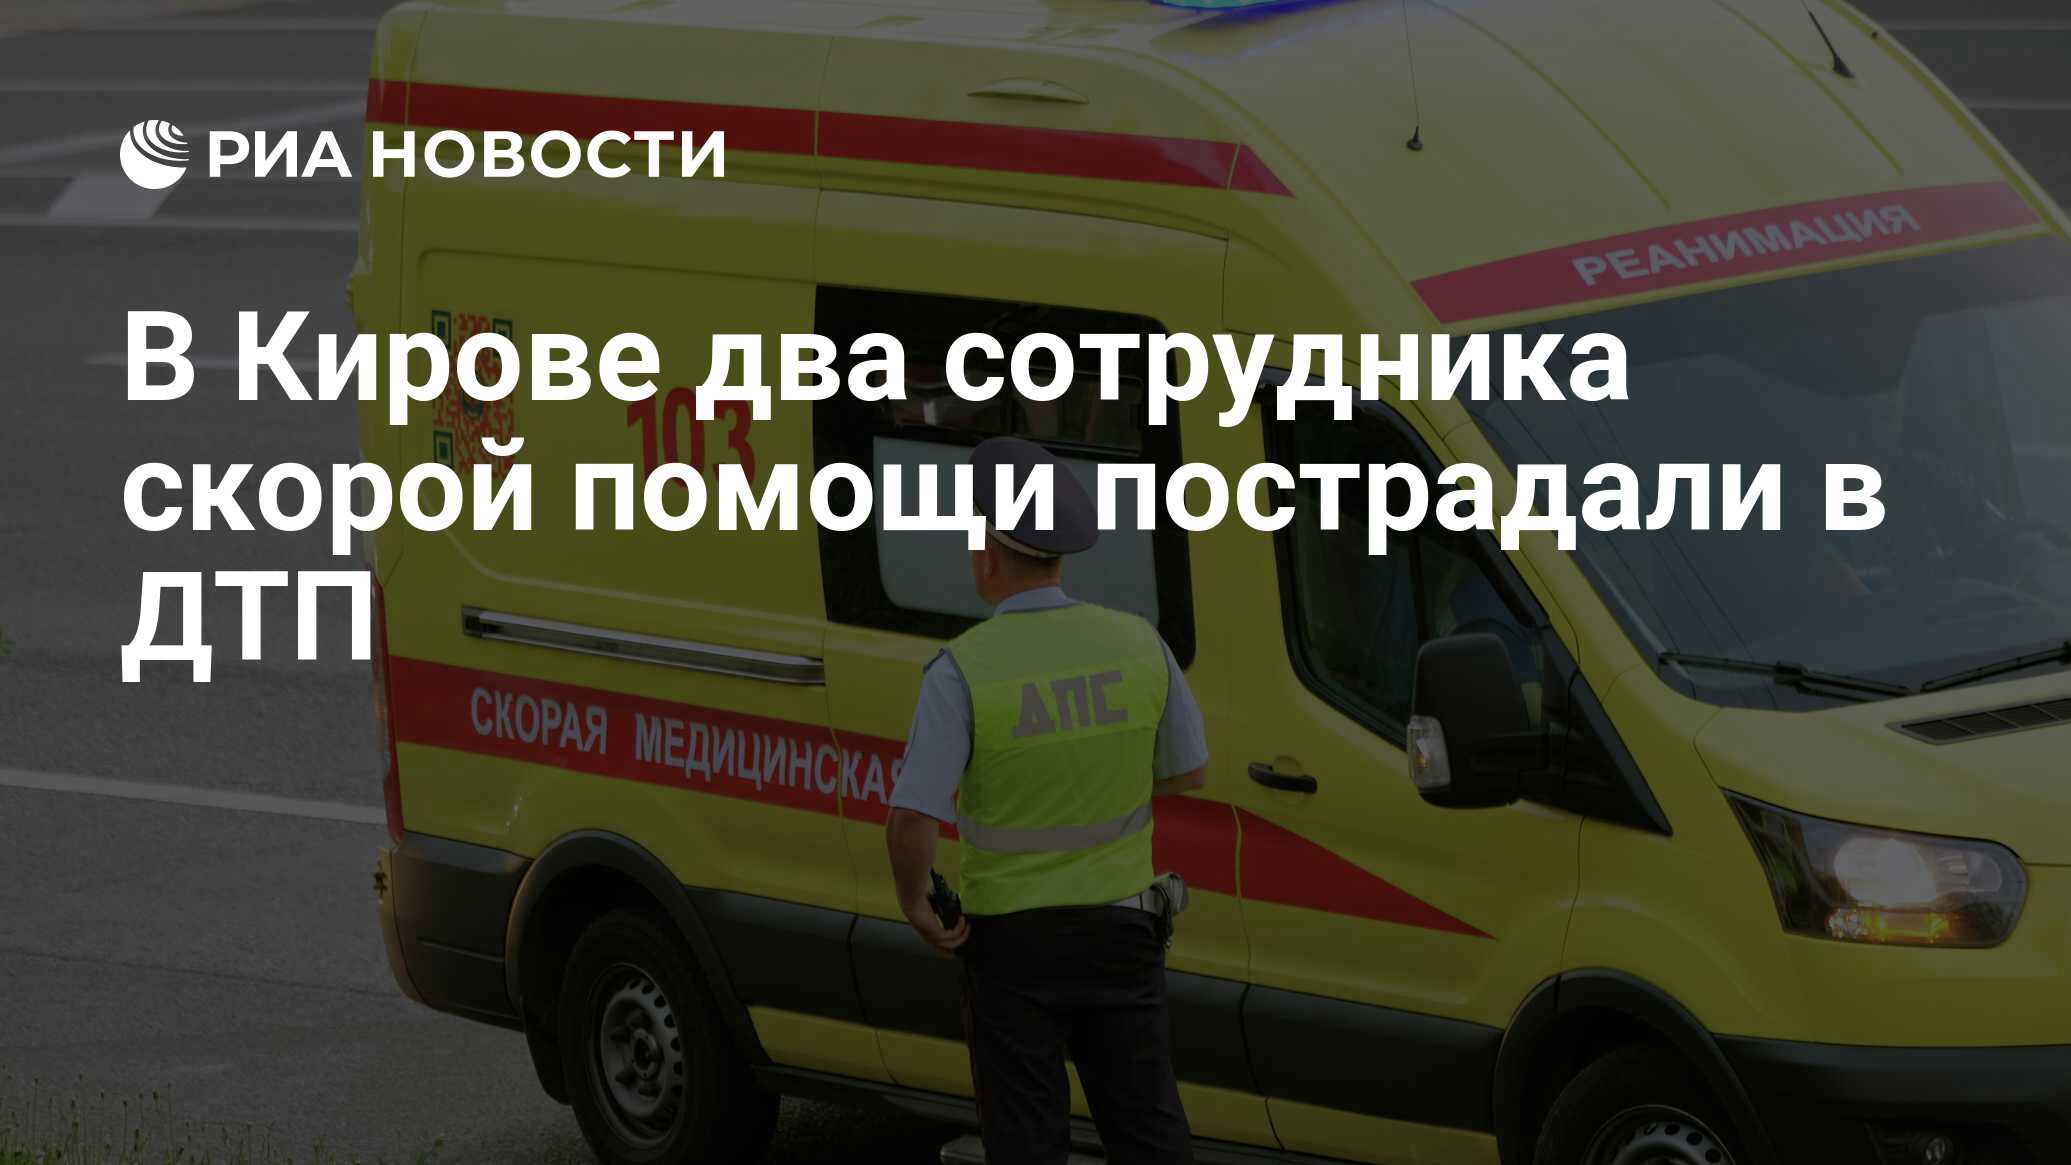 В Кирове два сотрудника скорой помощи пострадали в ДТП - РИА Новости .